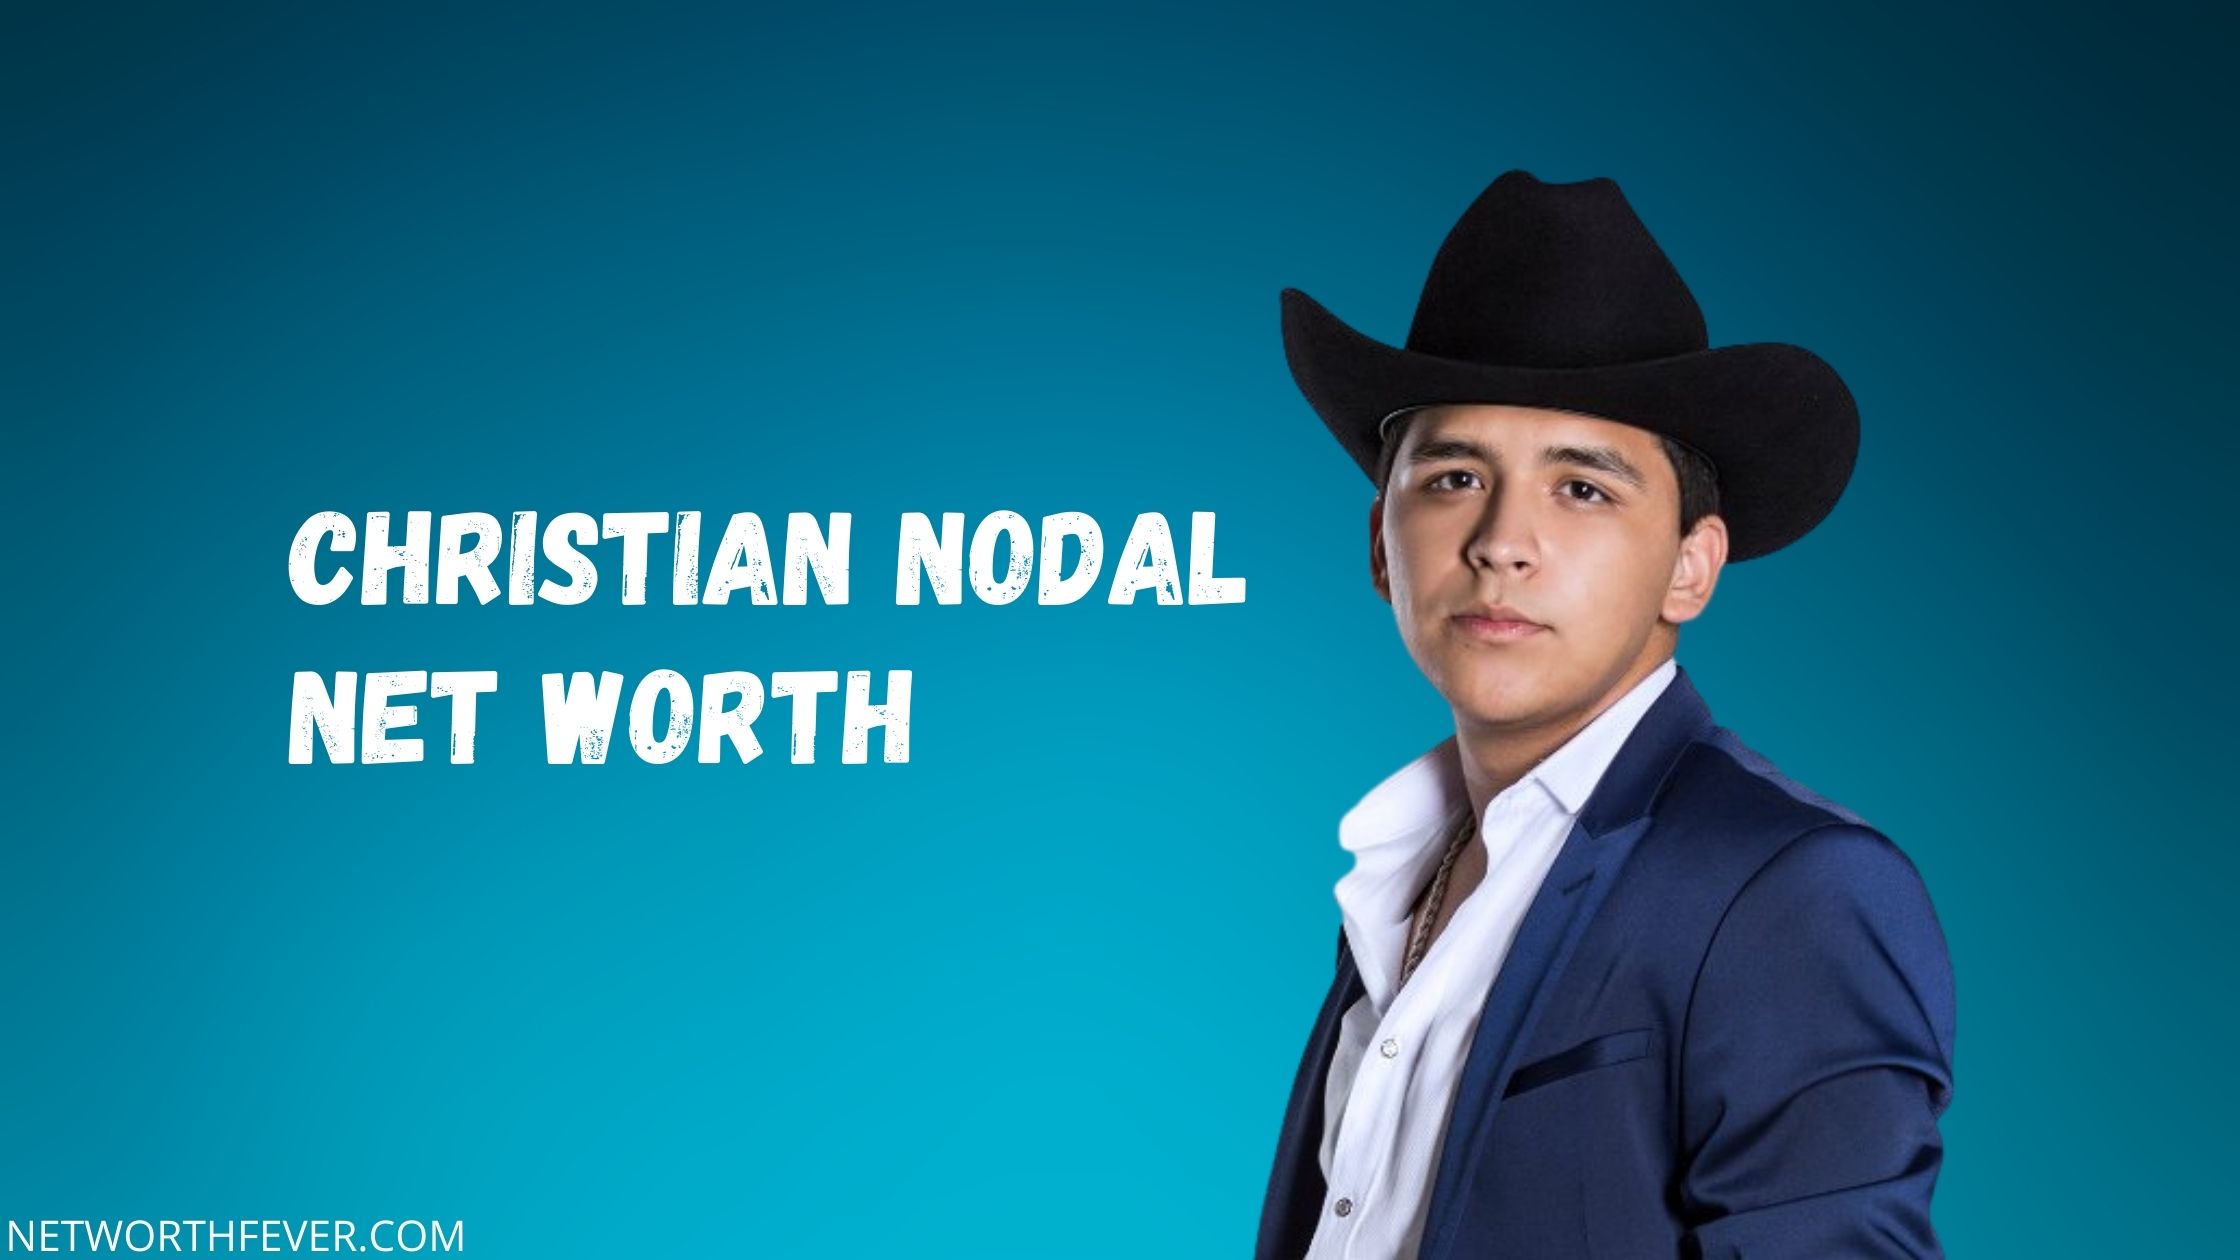 Christian Nodal Net Worth